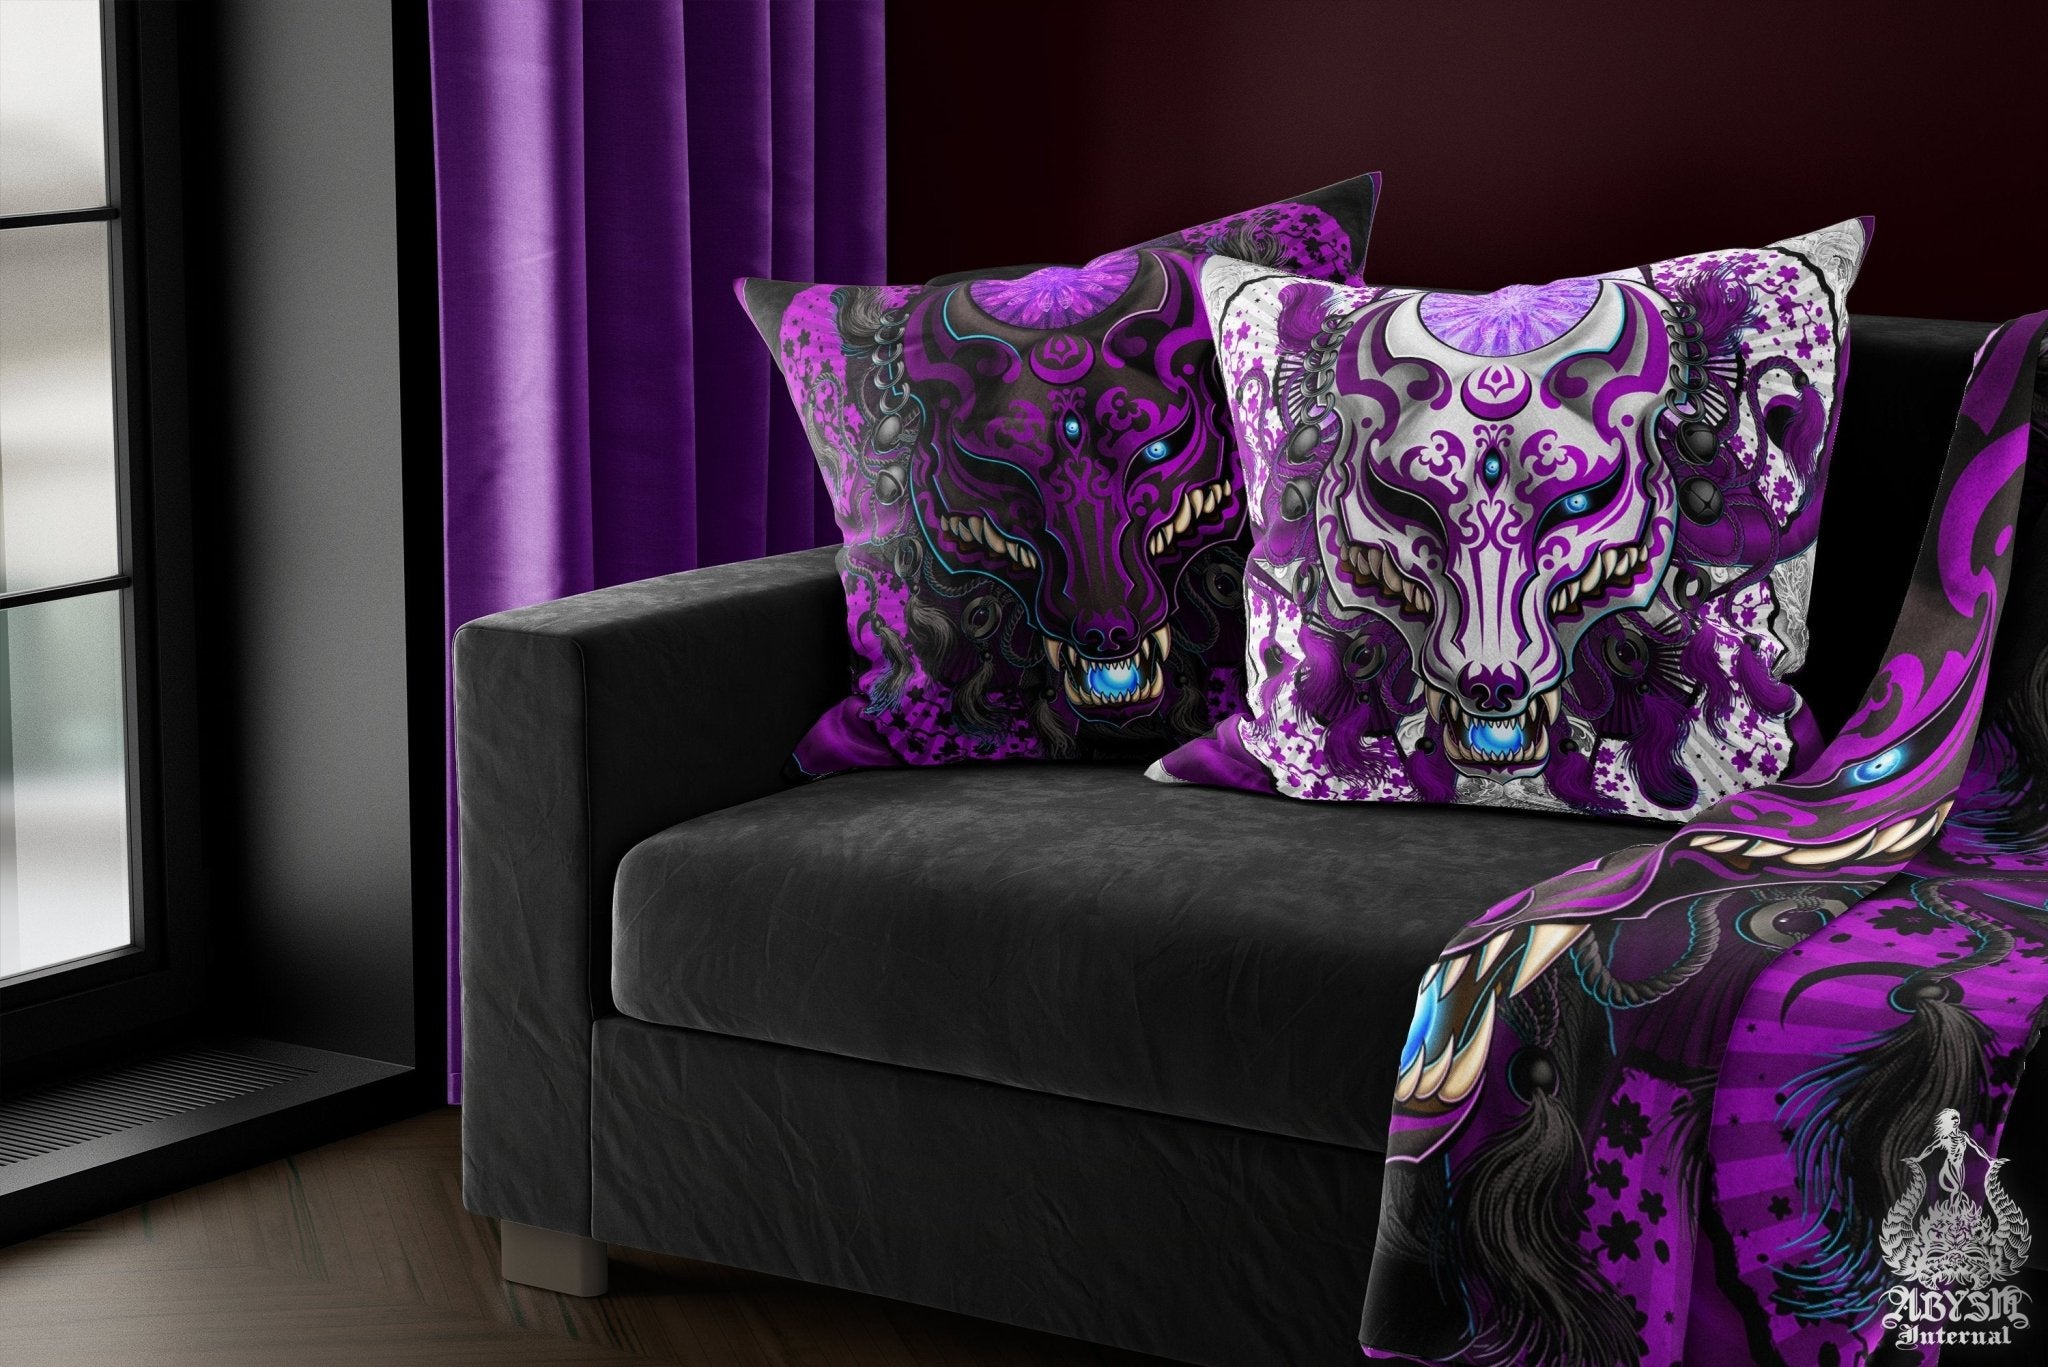 Pastel Goth Throw Pillow, Decorative Accent Cushion, Japanese Kitsune Mask, Anime and Gamer Room Decor, Okami, Alternative Home - Black & Purple - Abysm Internal